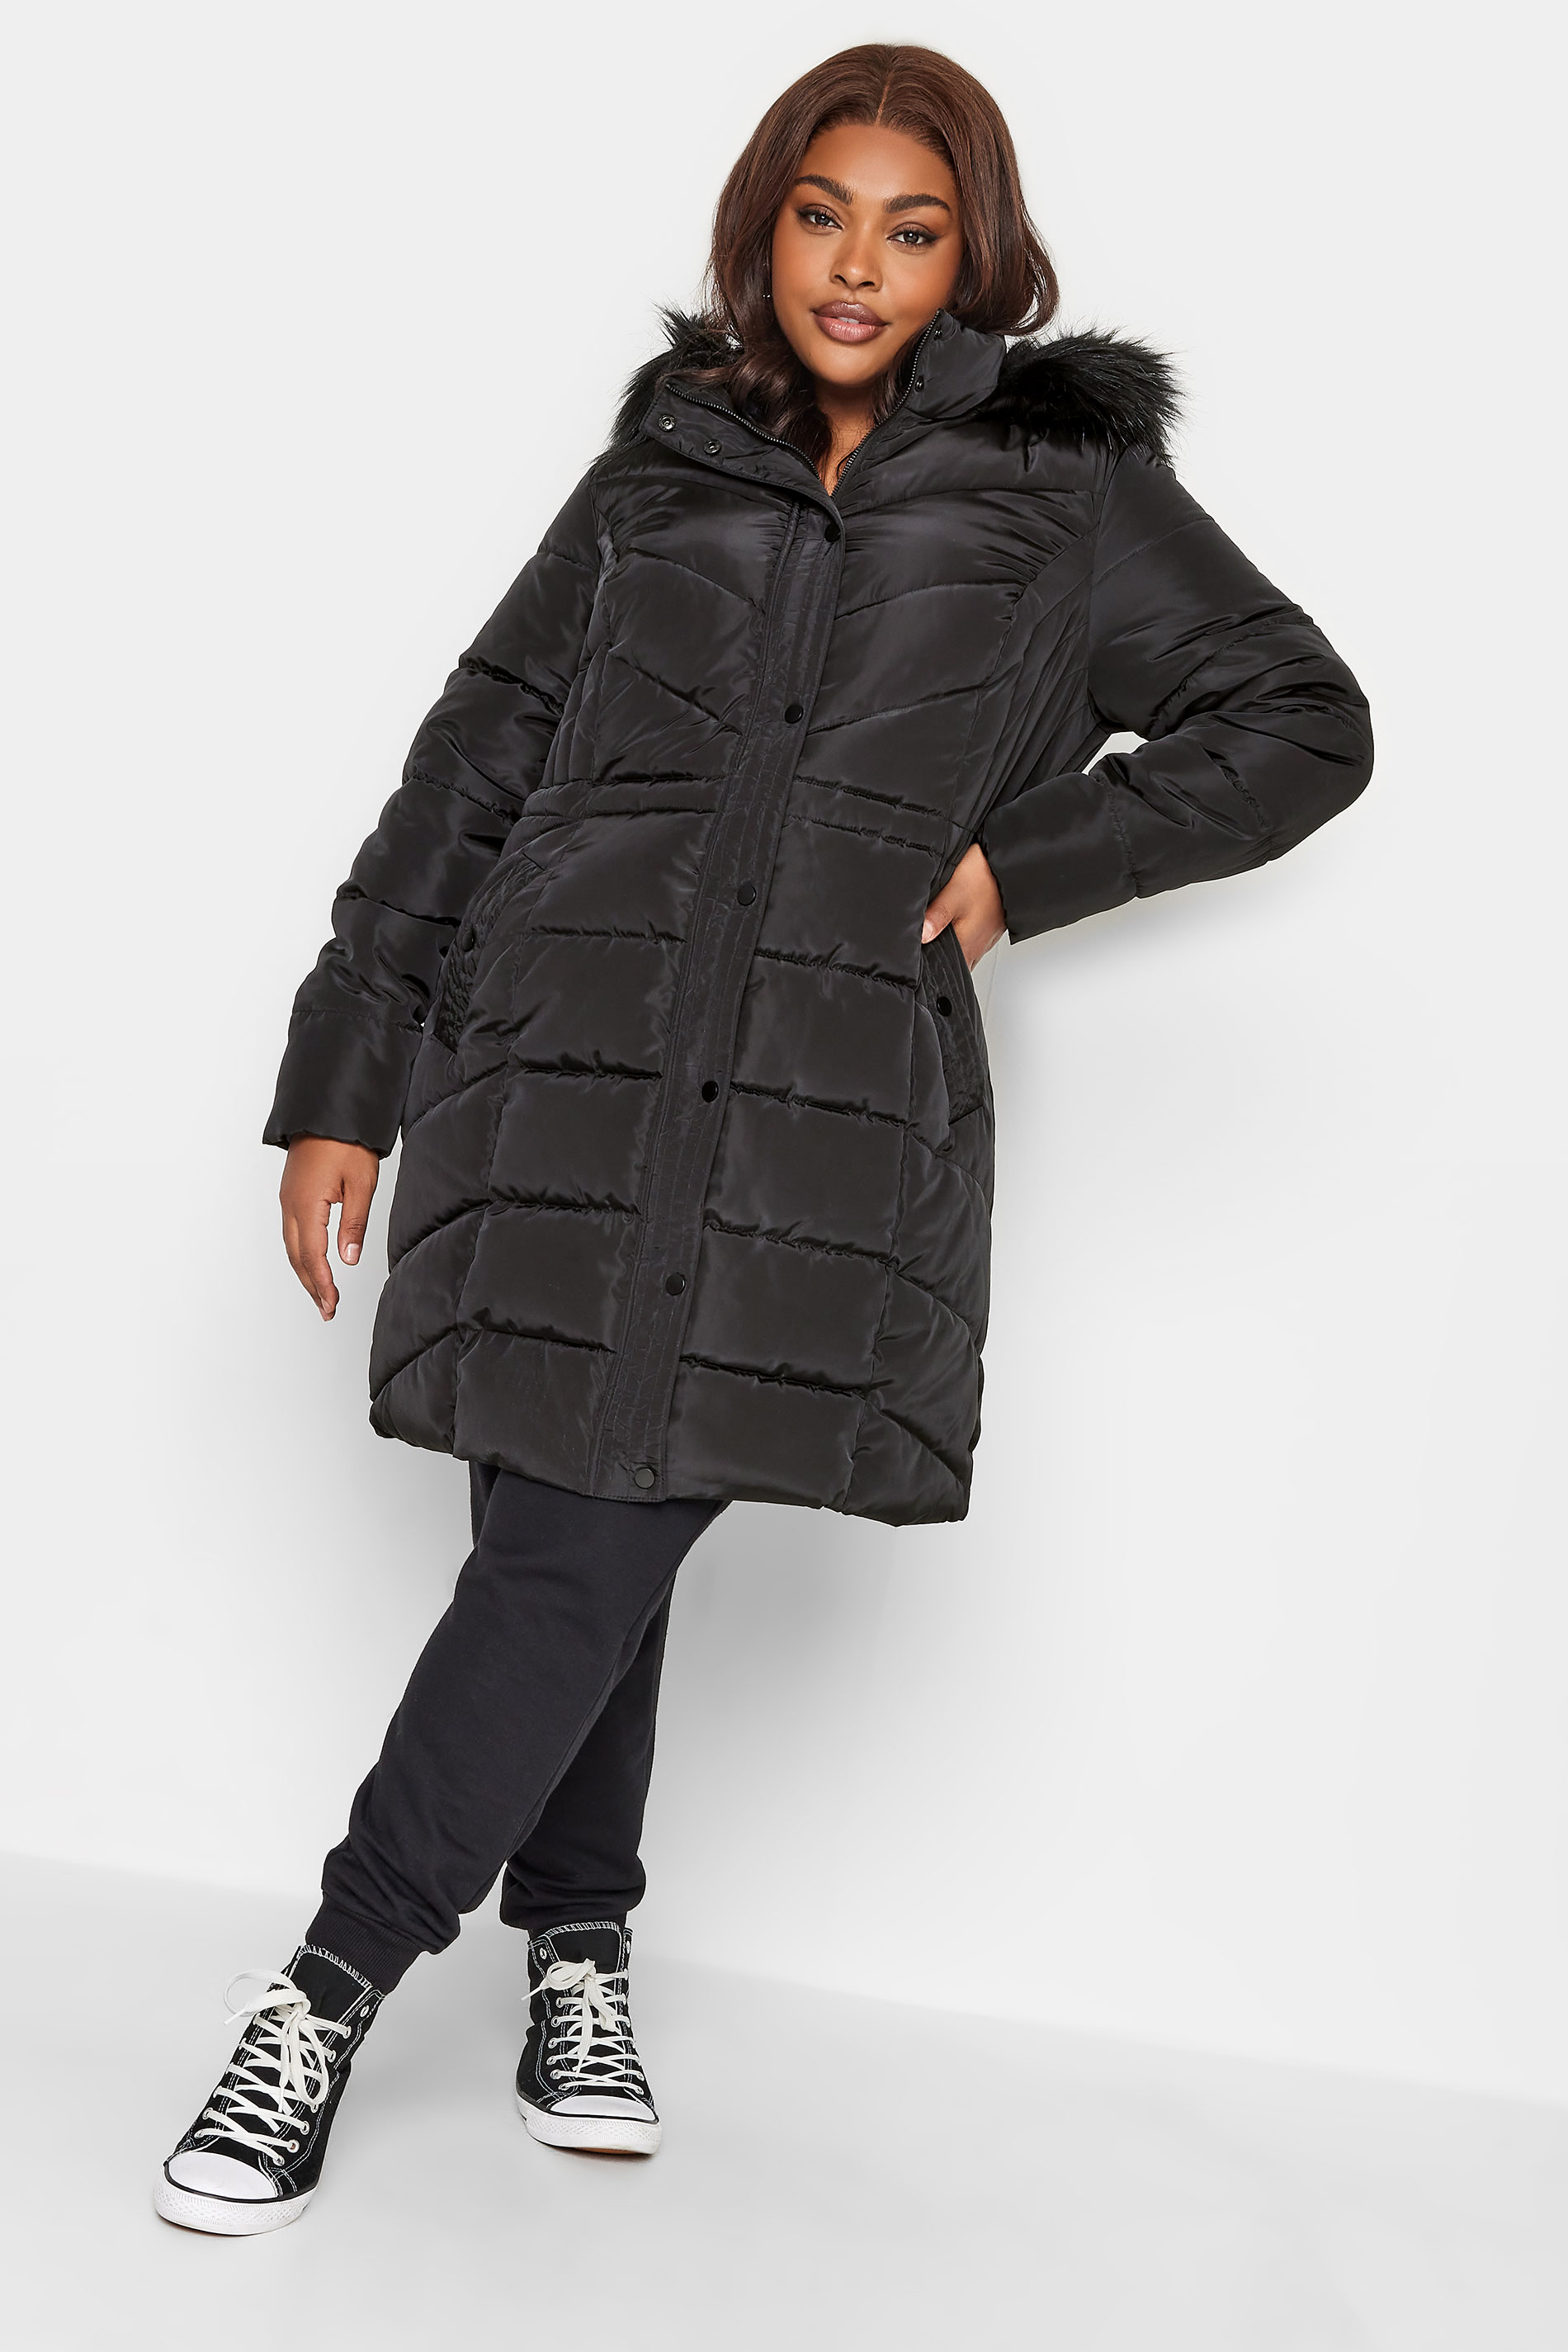 Yours Curve Black Midi Puffer Coat, Women's Curve & Plus Size, Yours